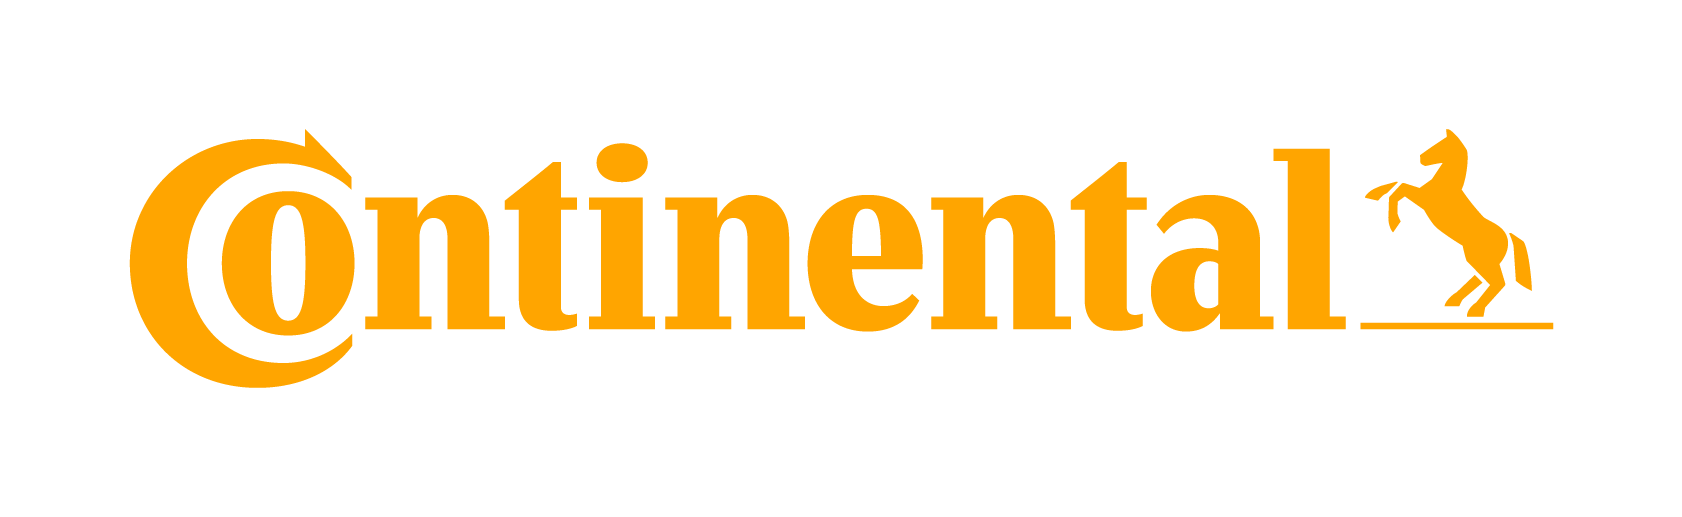 continental logo digital yellow srgb png zip data